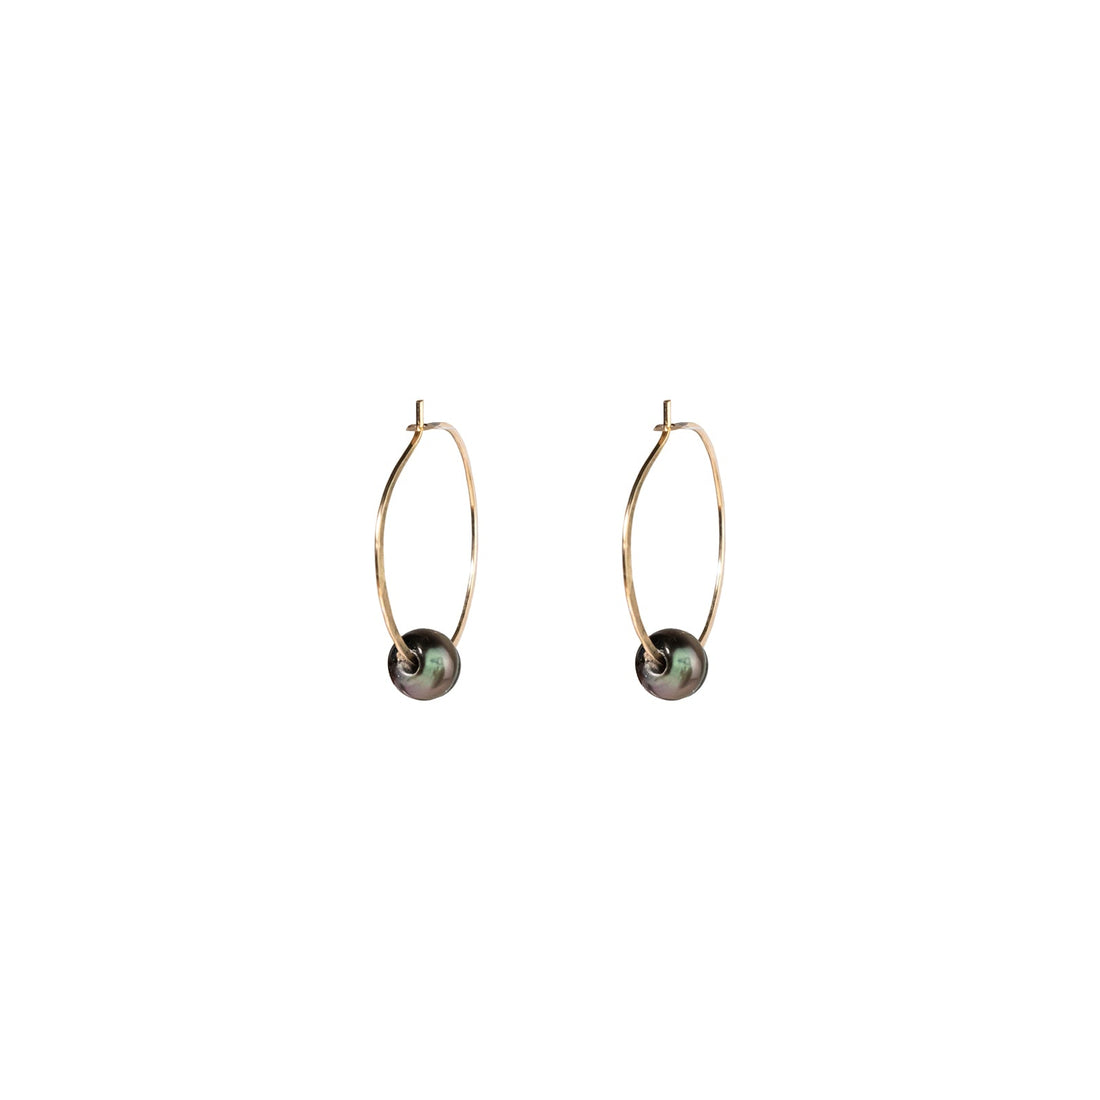 Kasia Earrings, 1.25" Gold Fill Hoop and Tahitian Black Pearl Earrings Sayulita Sol 